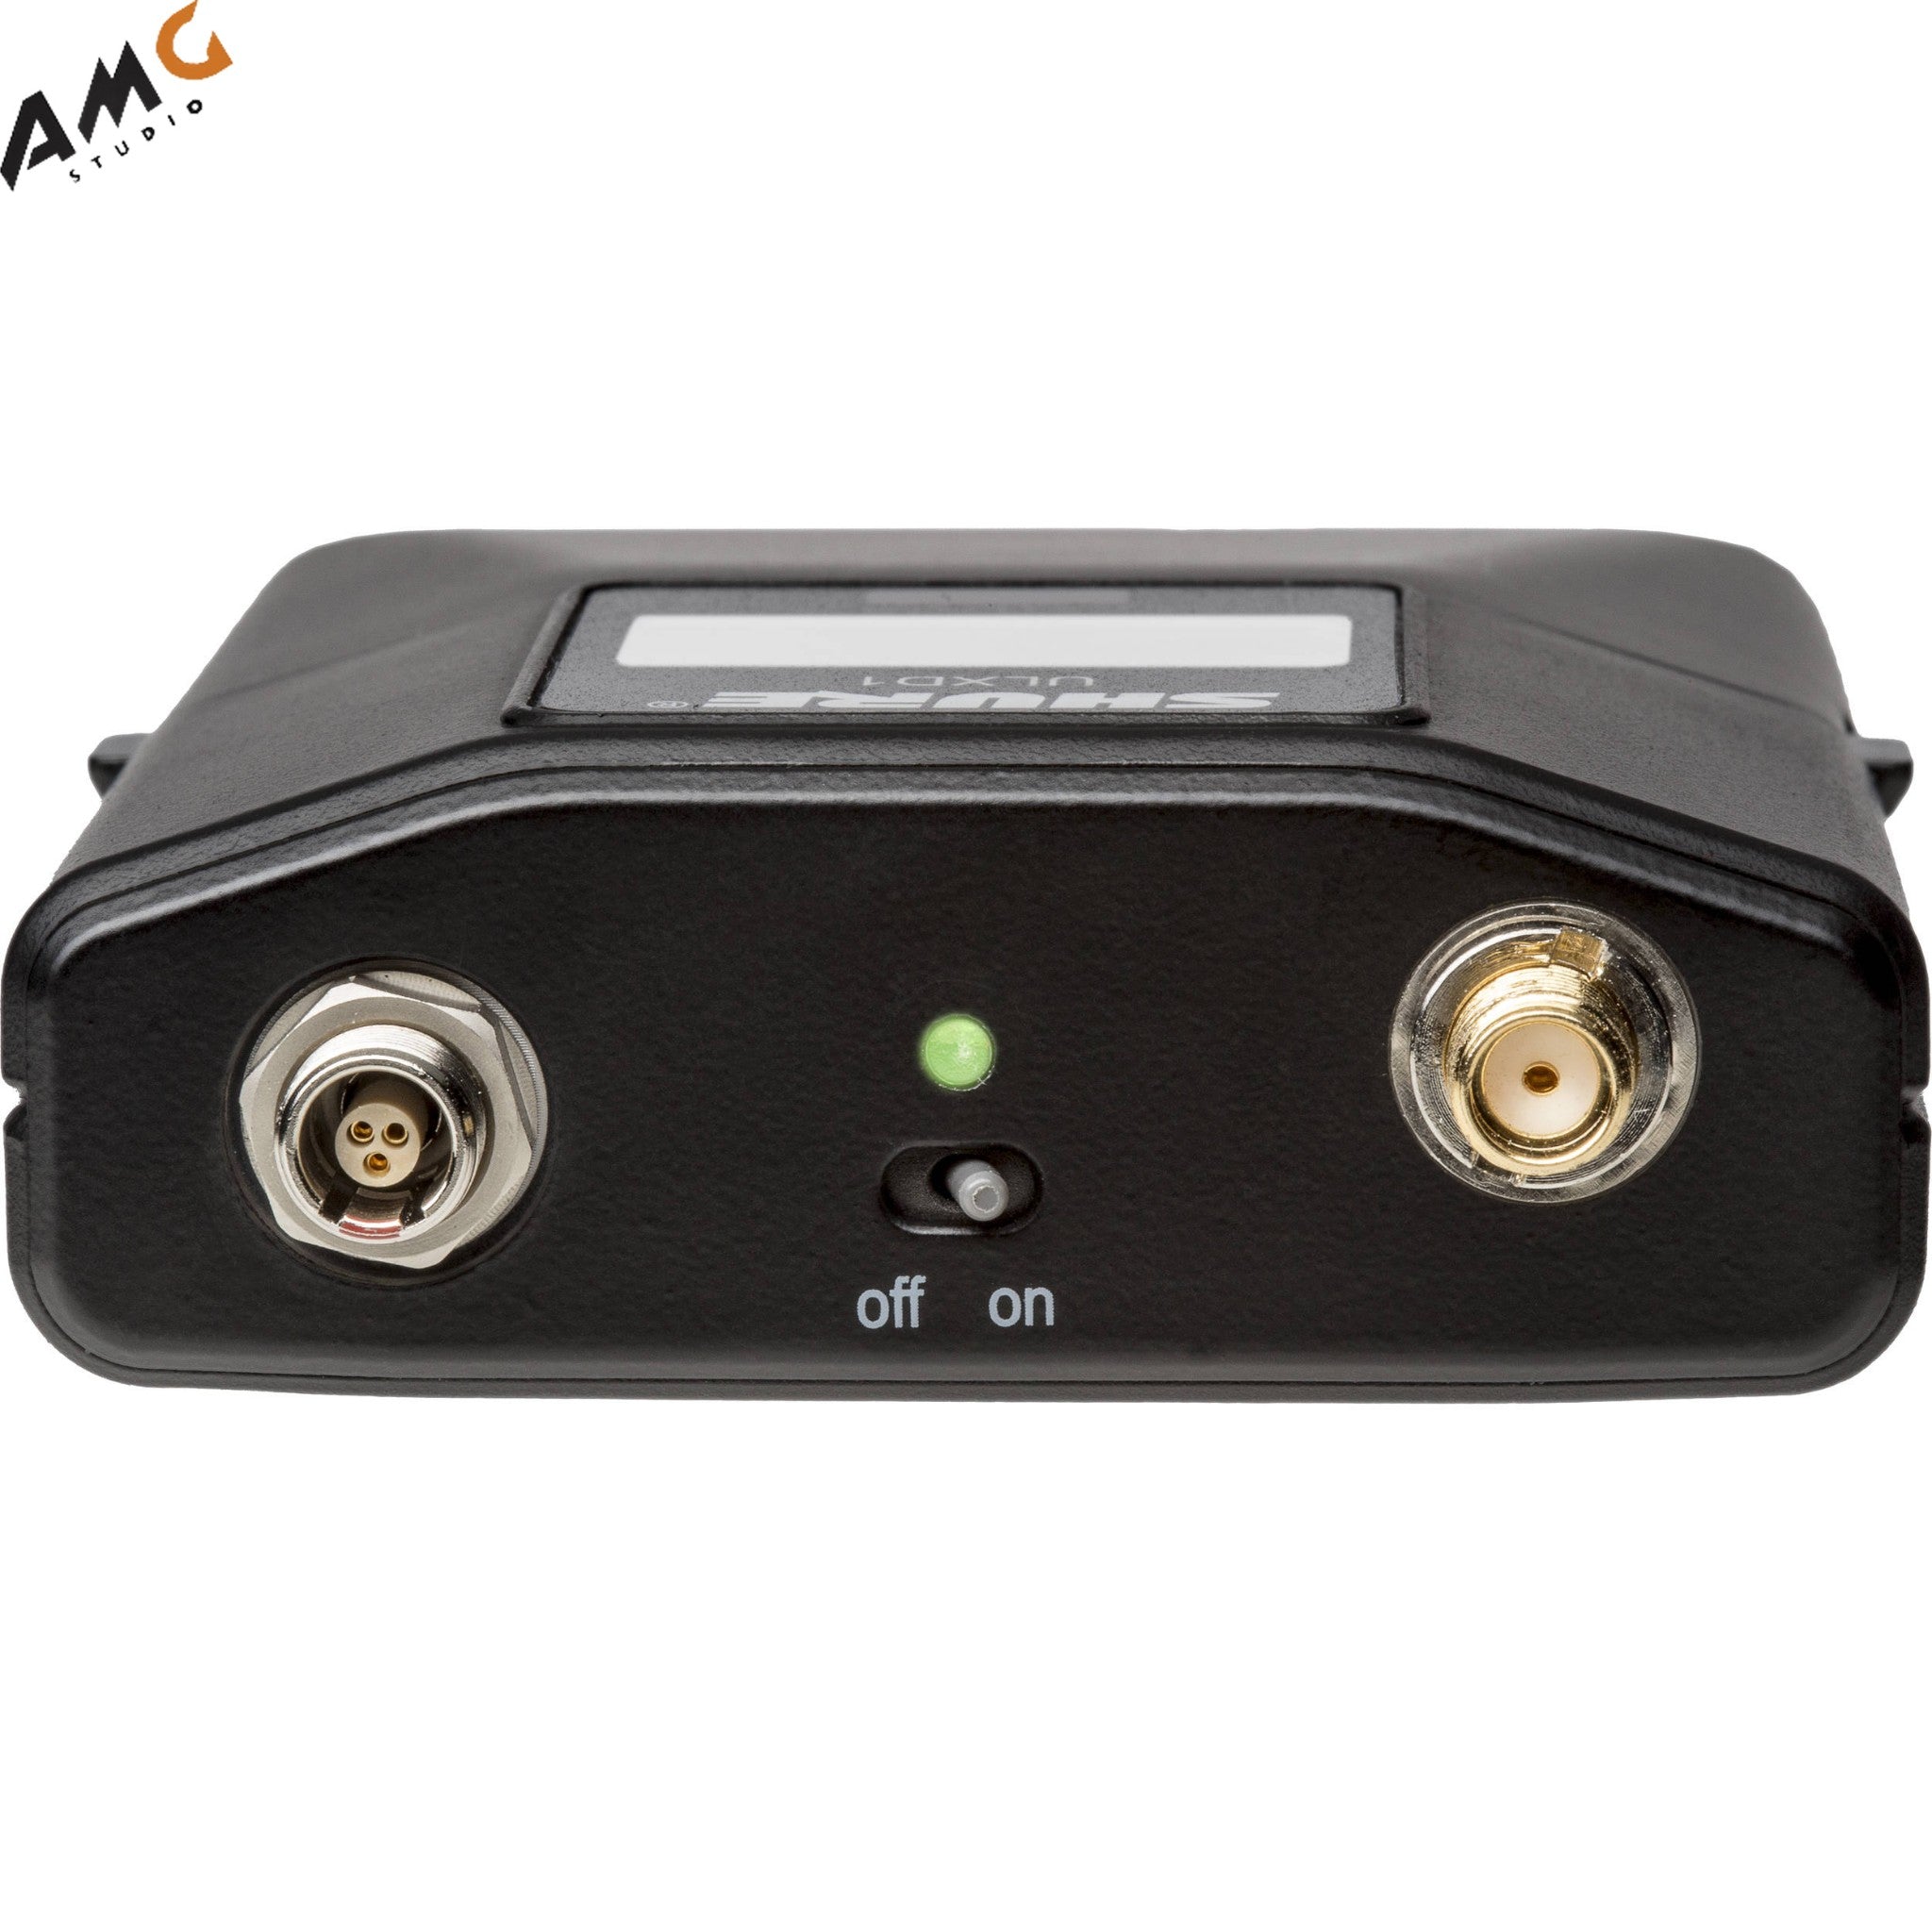 Shure ULXD1 Digital Bodypack Wireless Transmitter with TA4M or LEMO3 Conector - Studio AMG